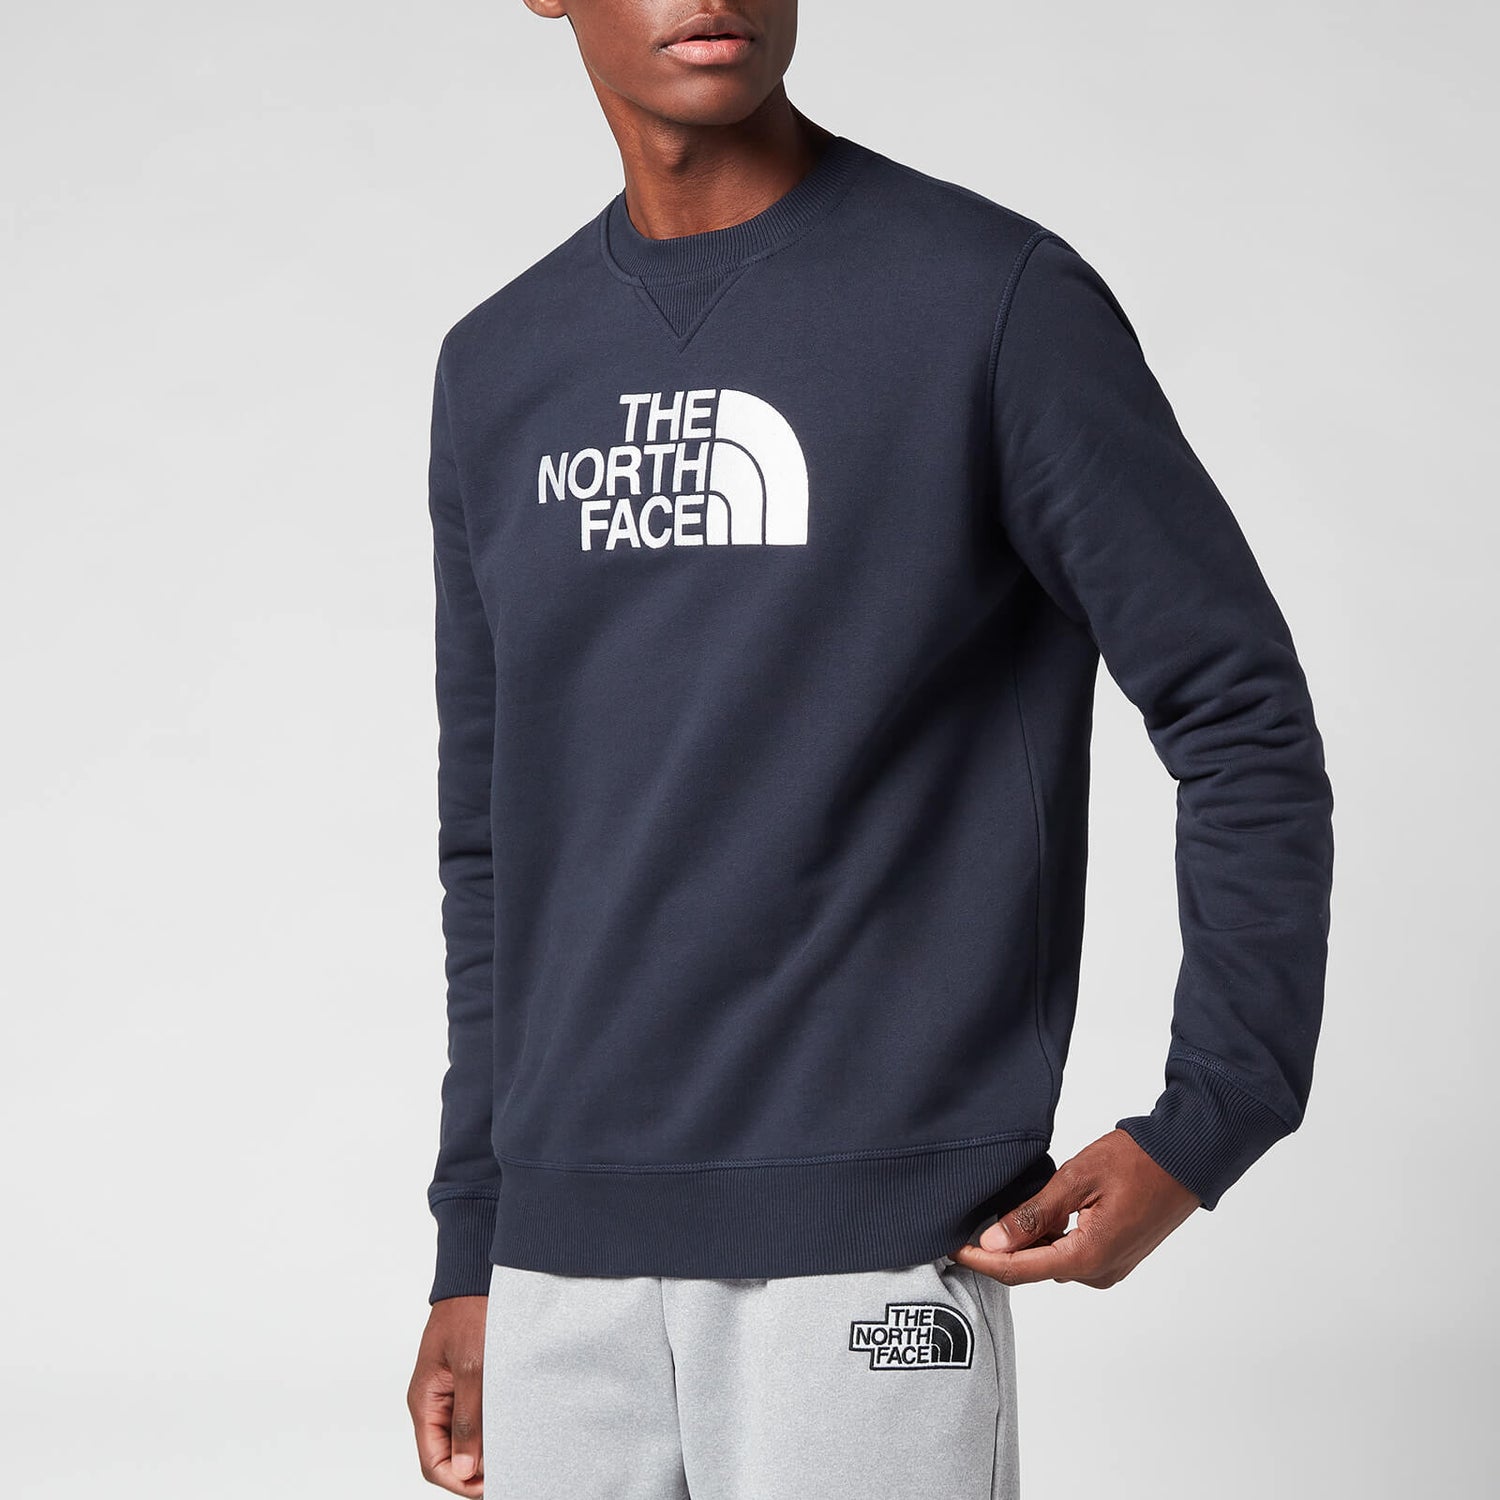 The North Face Men's Drew Peak Sweatshirt - Urban Navy